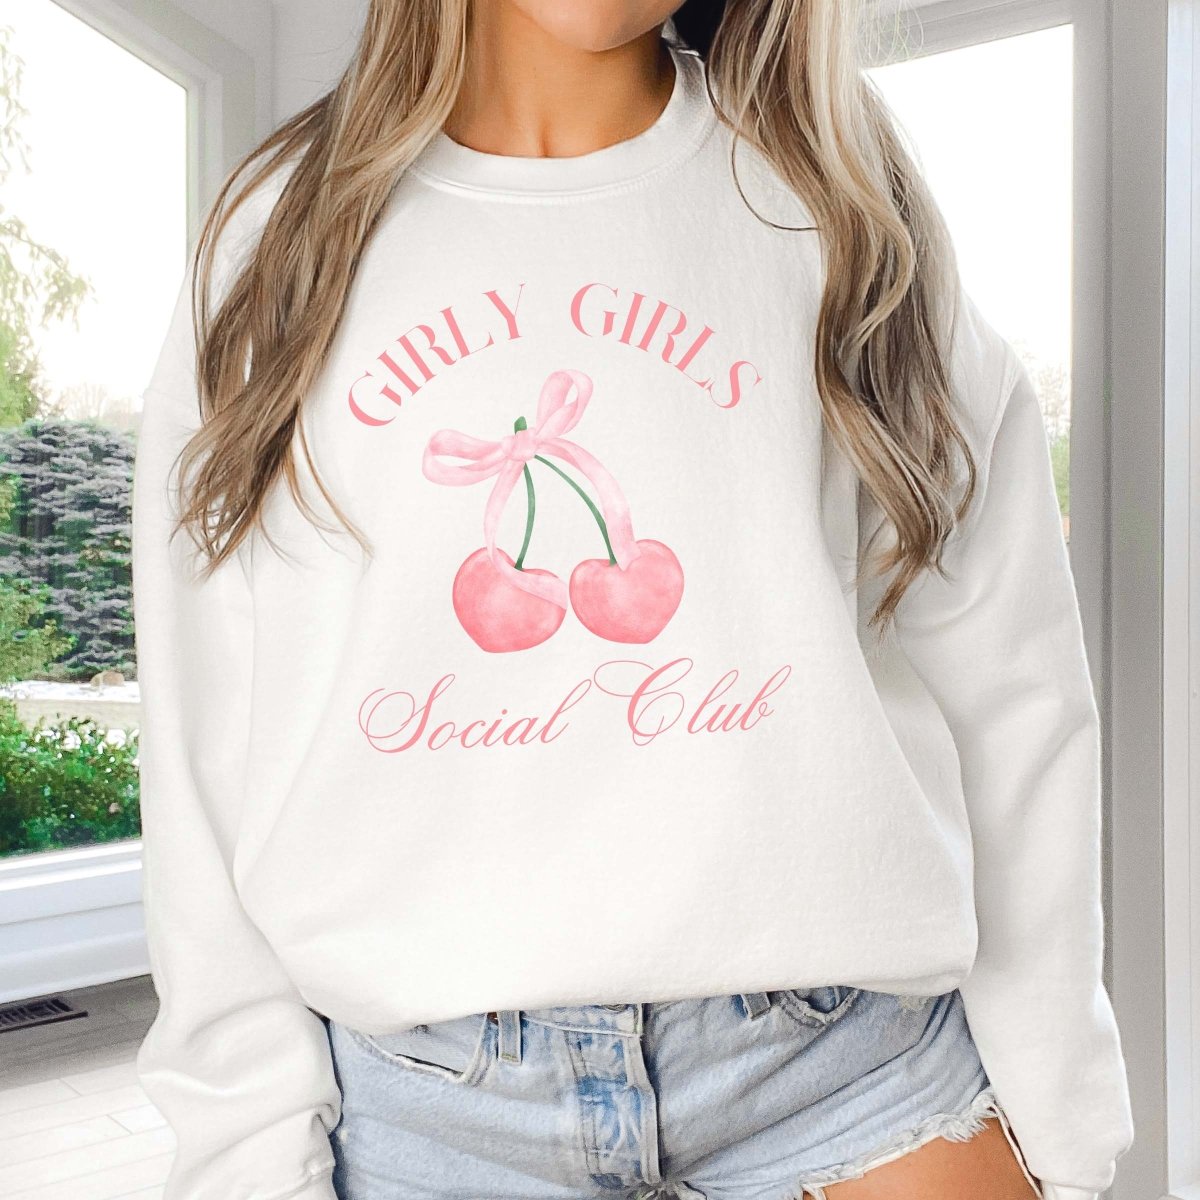 Girly Girls Social Club Sweatshirt - Trending - Limeberry Designs